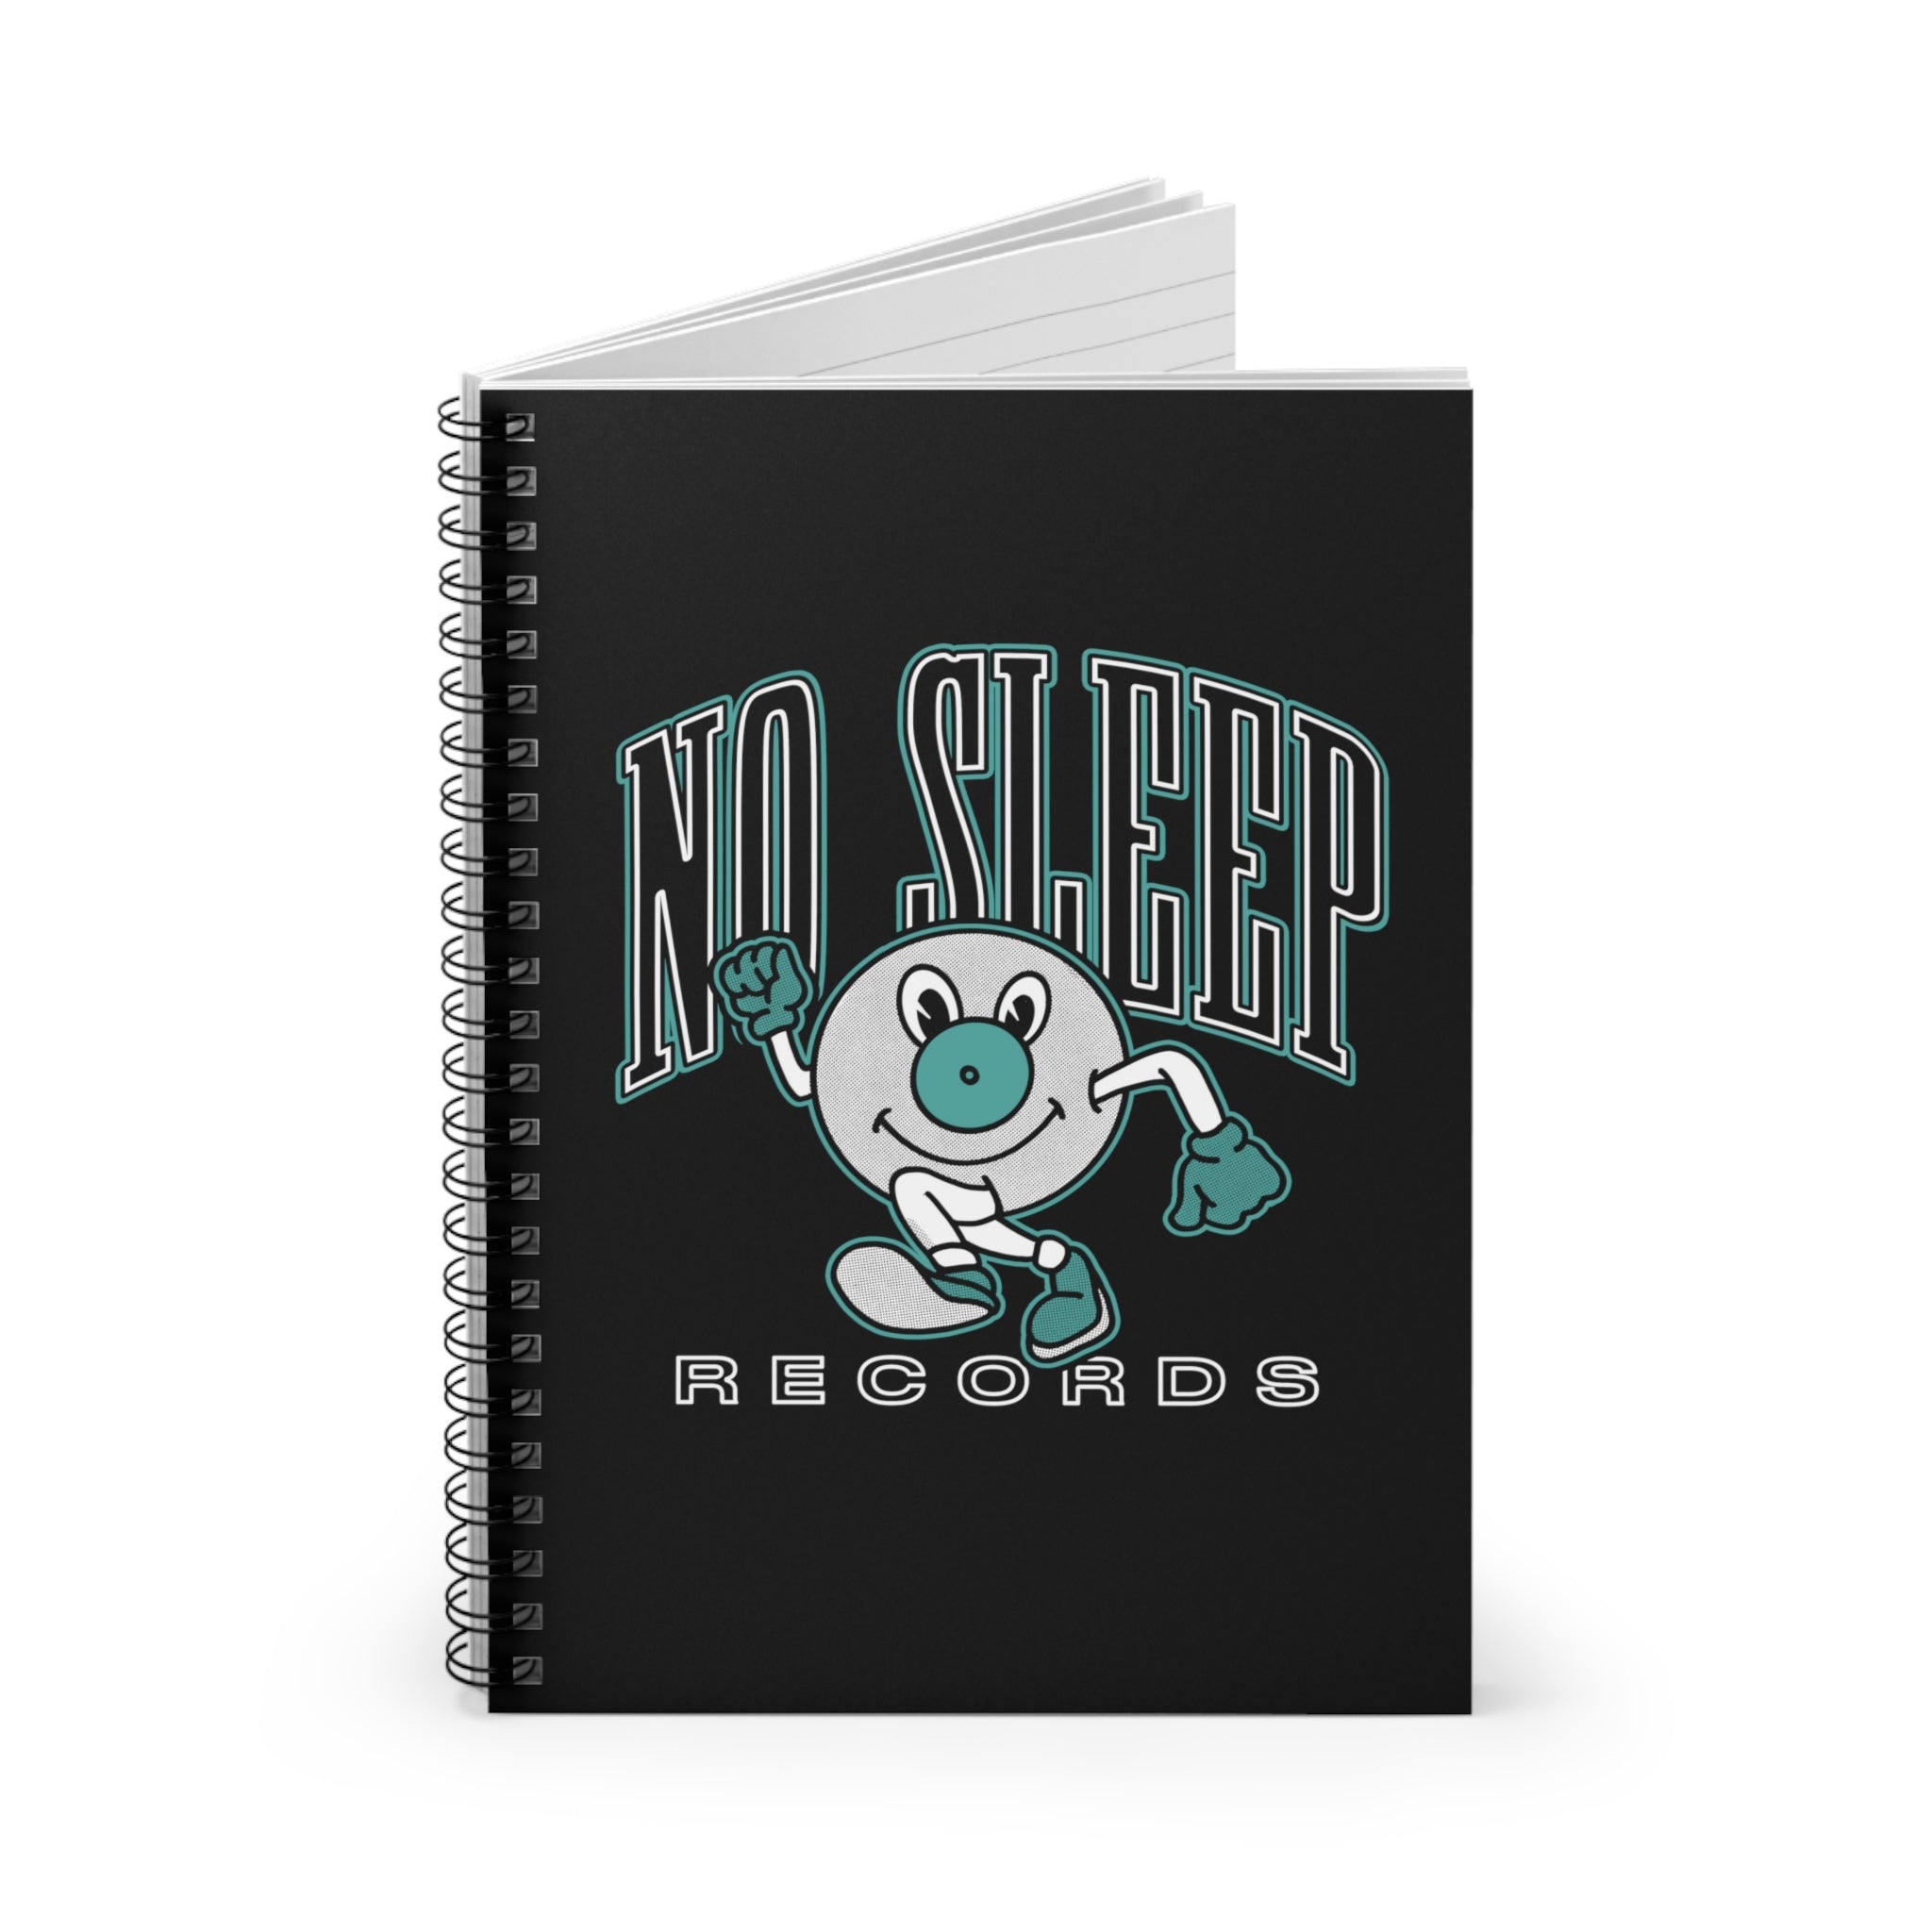 Vinyl Mascot Spiral Notebook - Ruled Line